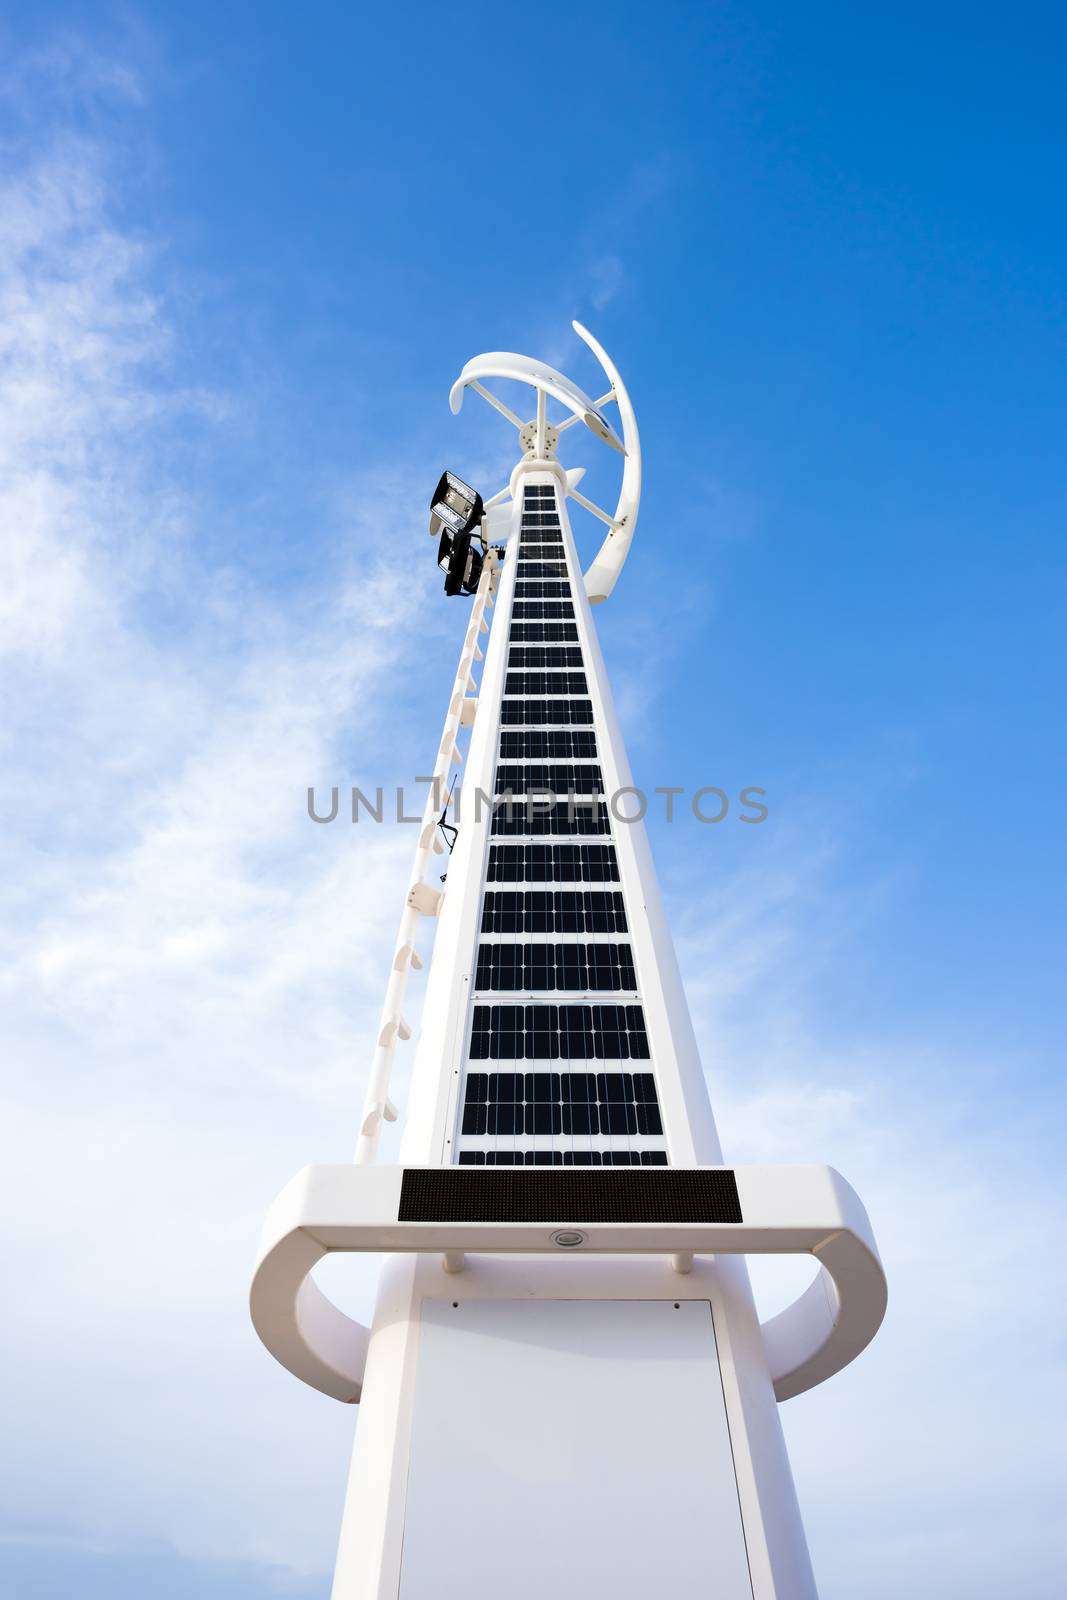 Solar and wind turbine hybrid systems installed at Dubai open beach Jumeirah, United Arab Emirates